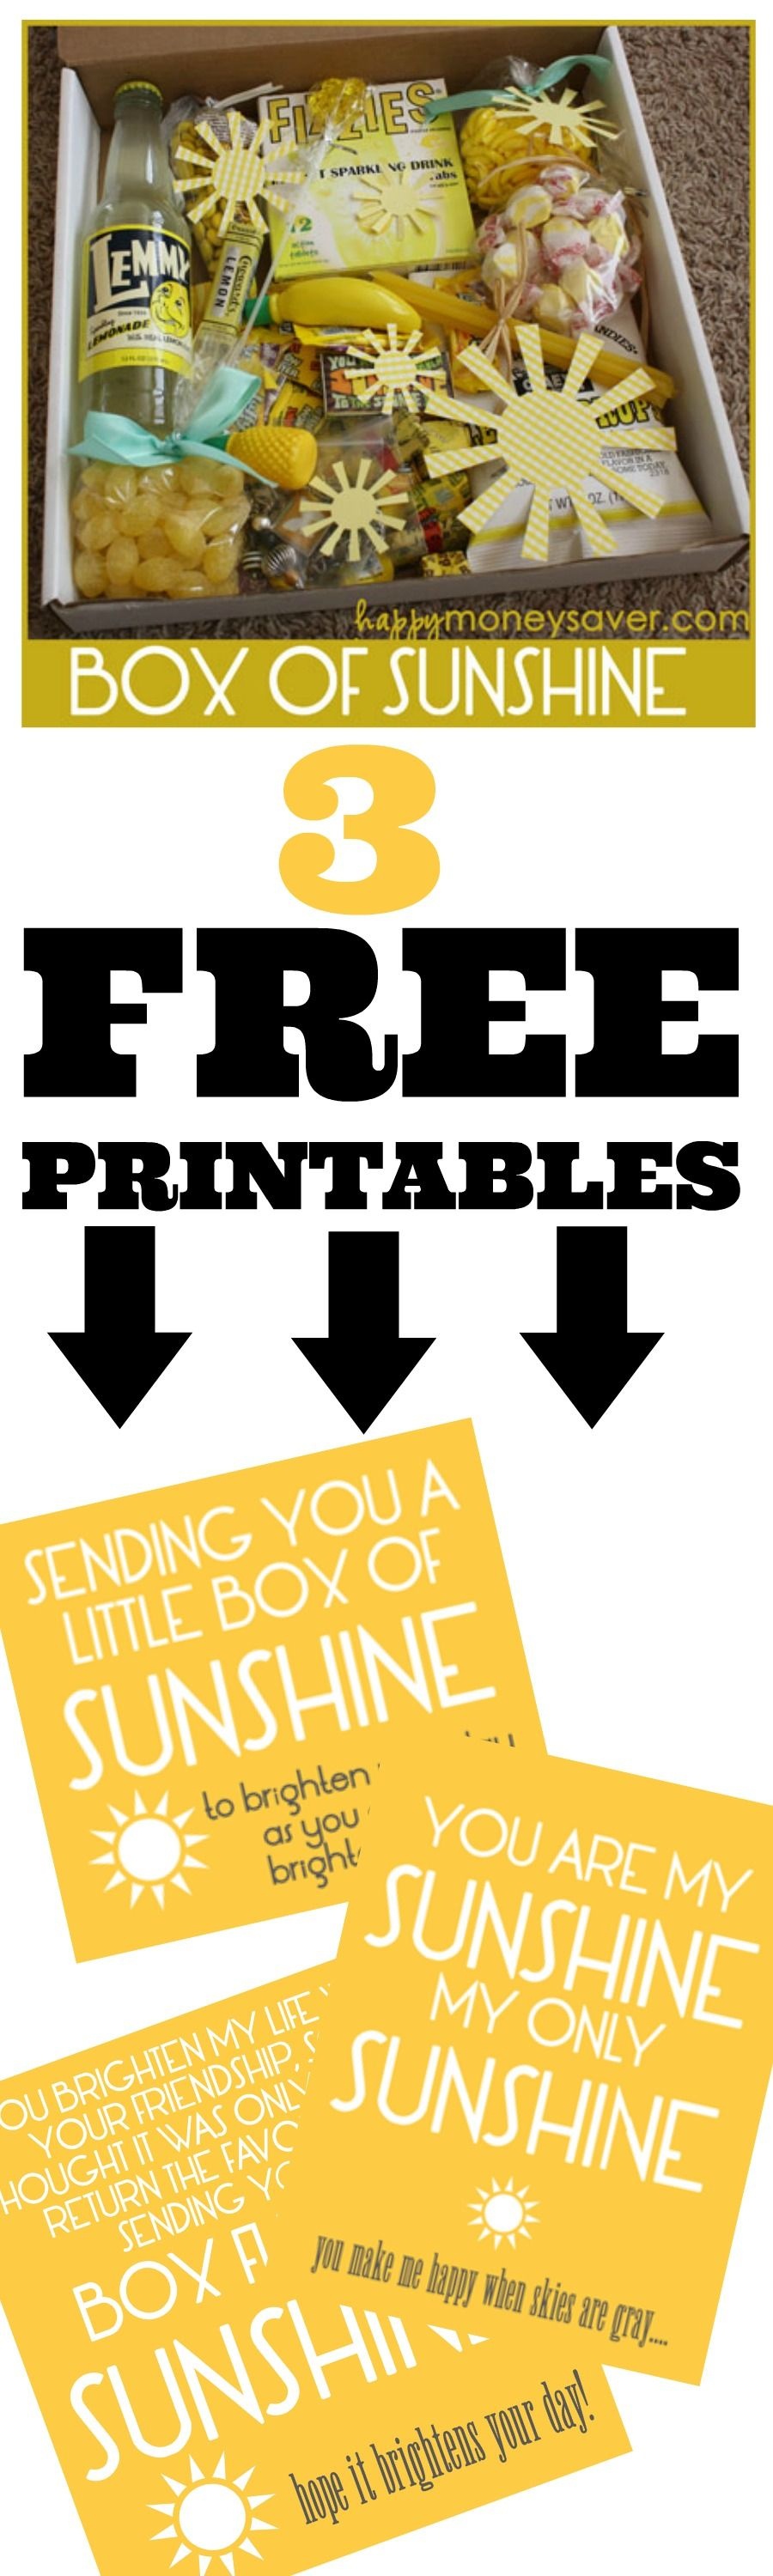 Free Printable - Send A Box Of Sunshine To Brighten Someones Day - Box Of Sunshine Free Printable